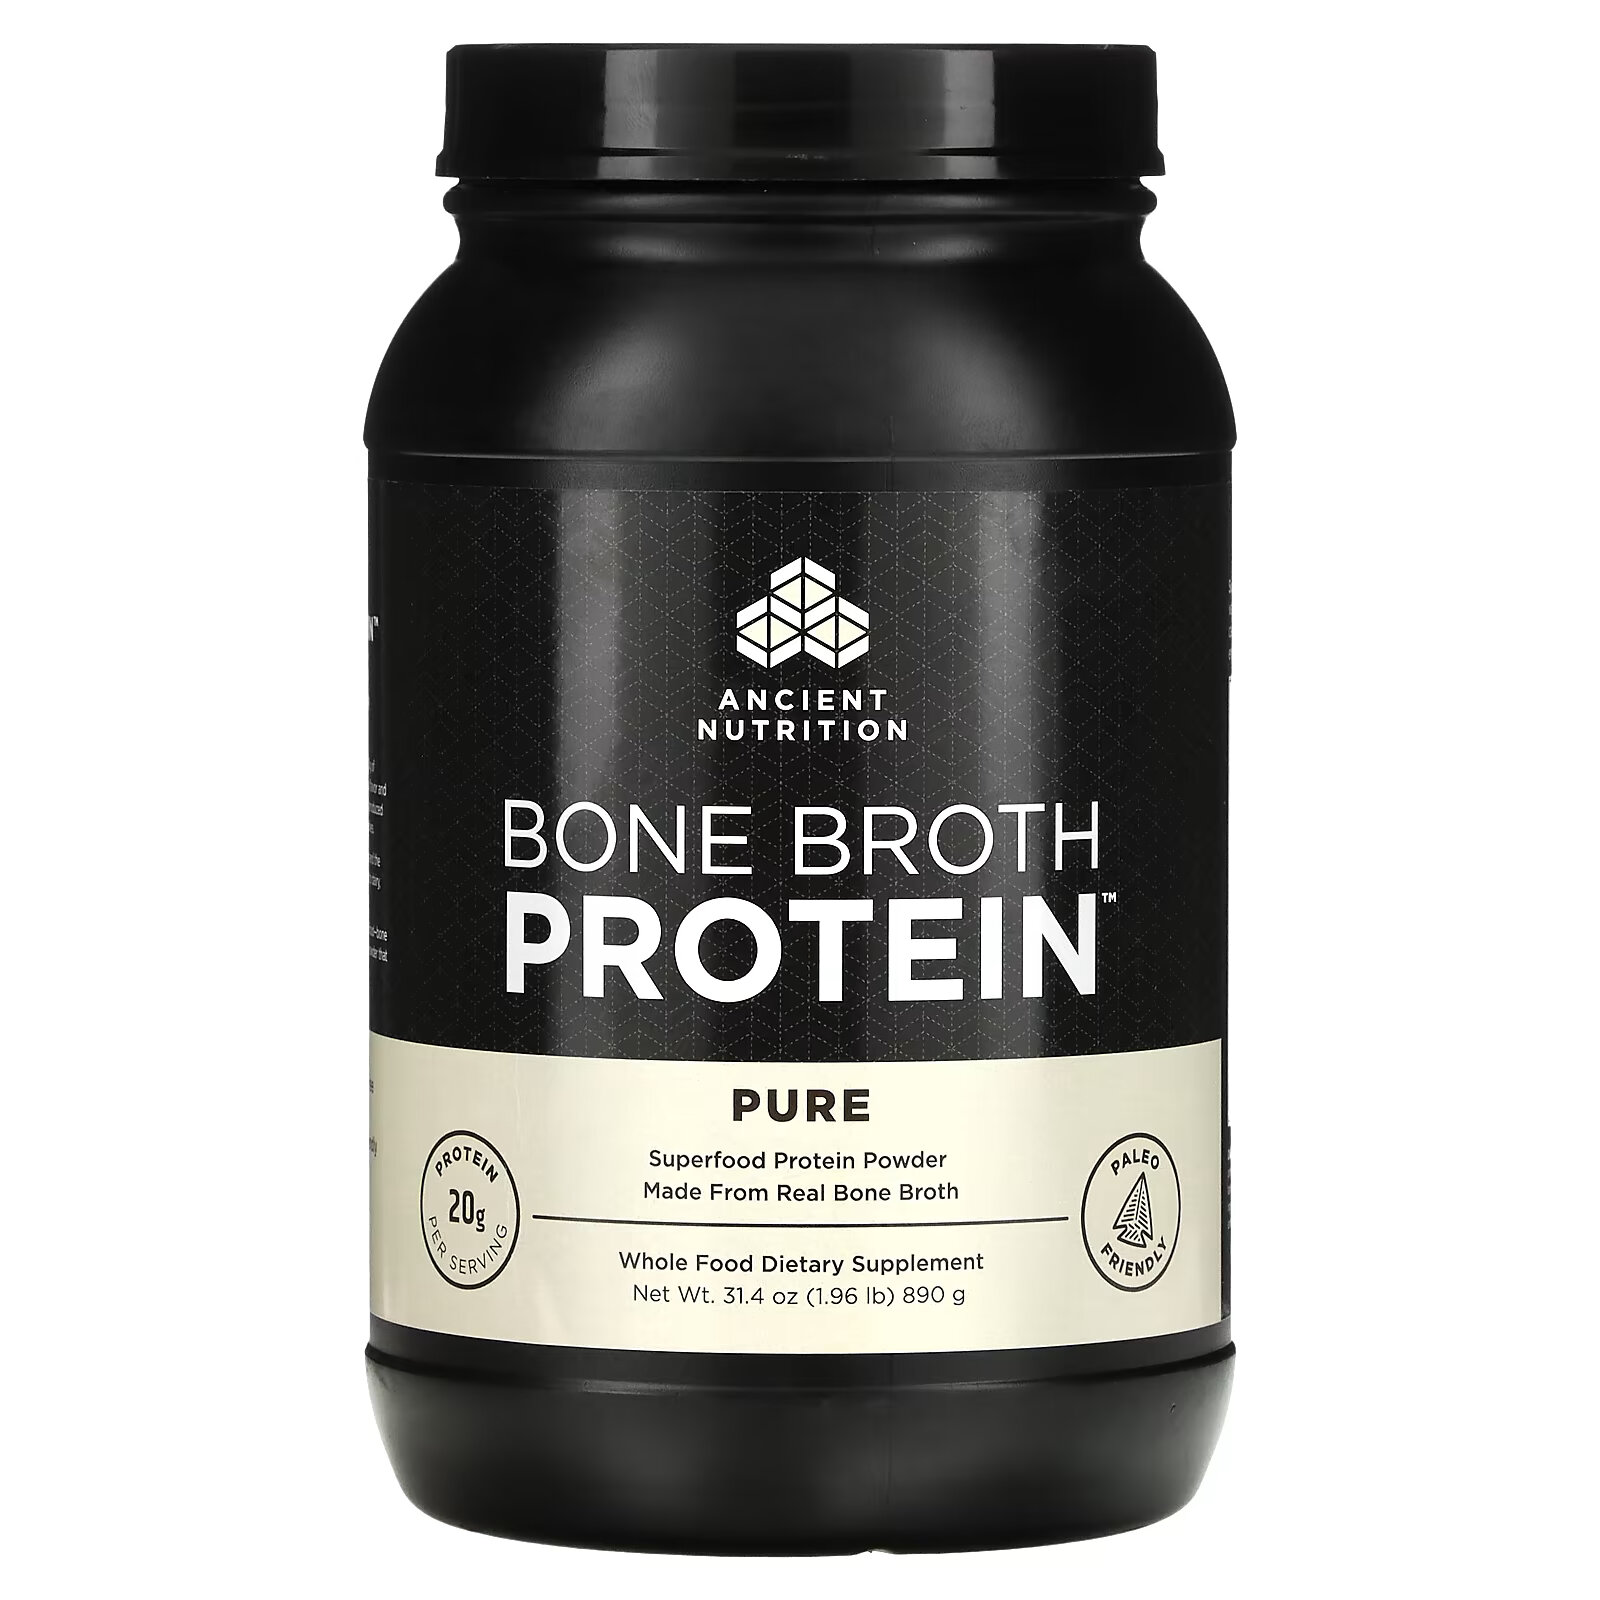 dr axe ancient nutrition bone broth protein чистый белок 890 г 1 96 фунта Dr. Axe / Ancient Nutrition, Bone Broth Protein, чистый белок, 890 г (1,96 фунта)